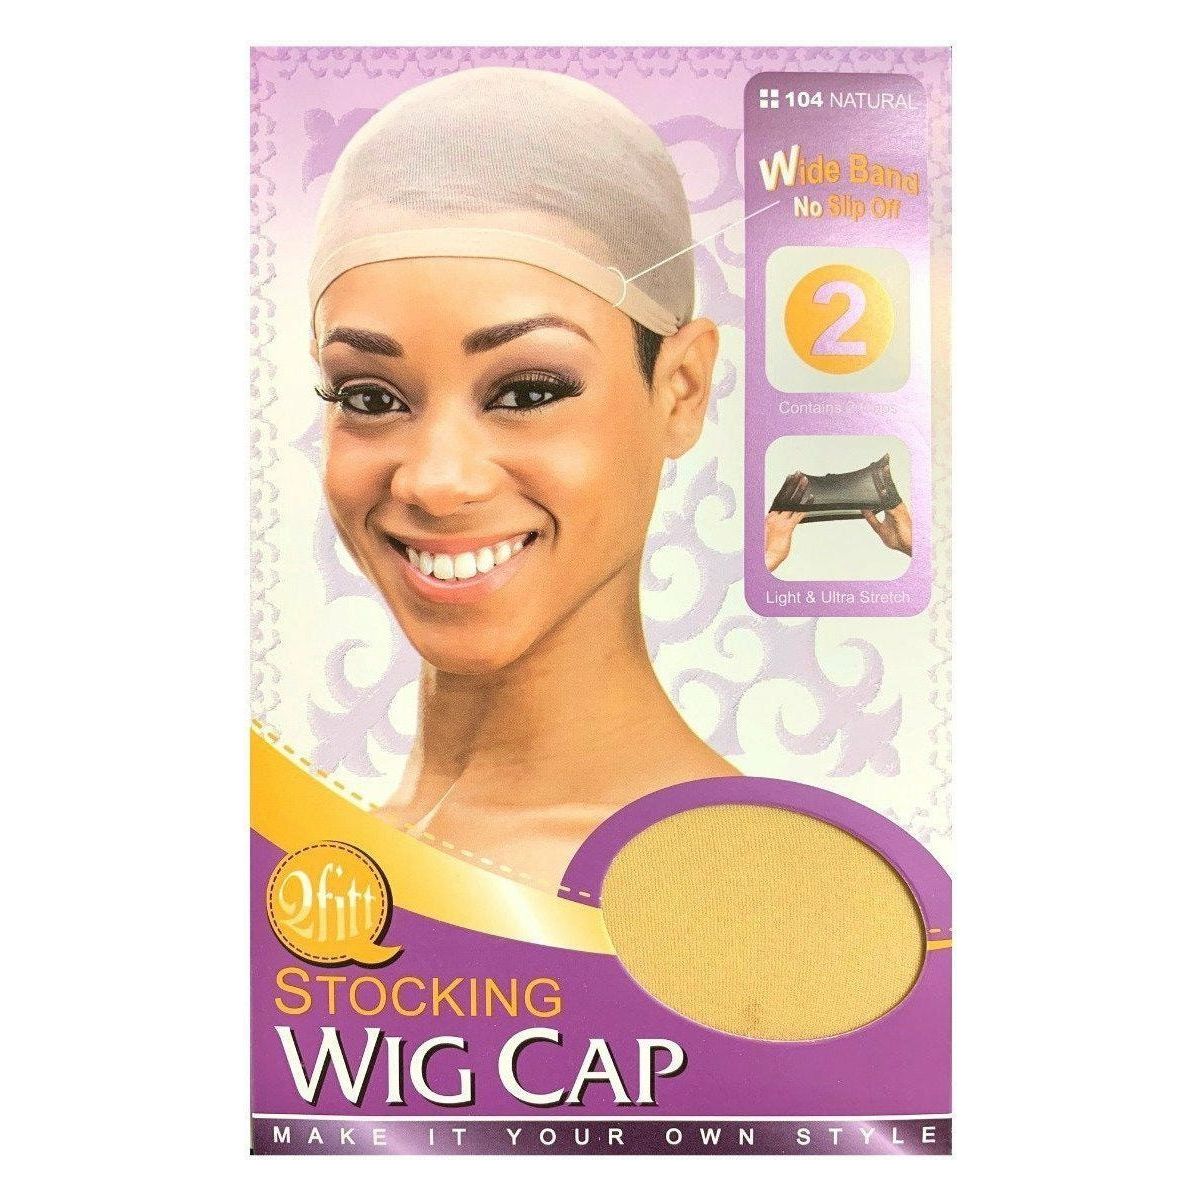 #556 Mesh Wig & Weave Cap- Brown